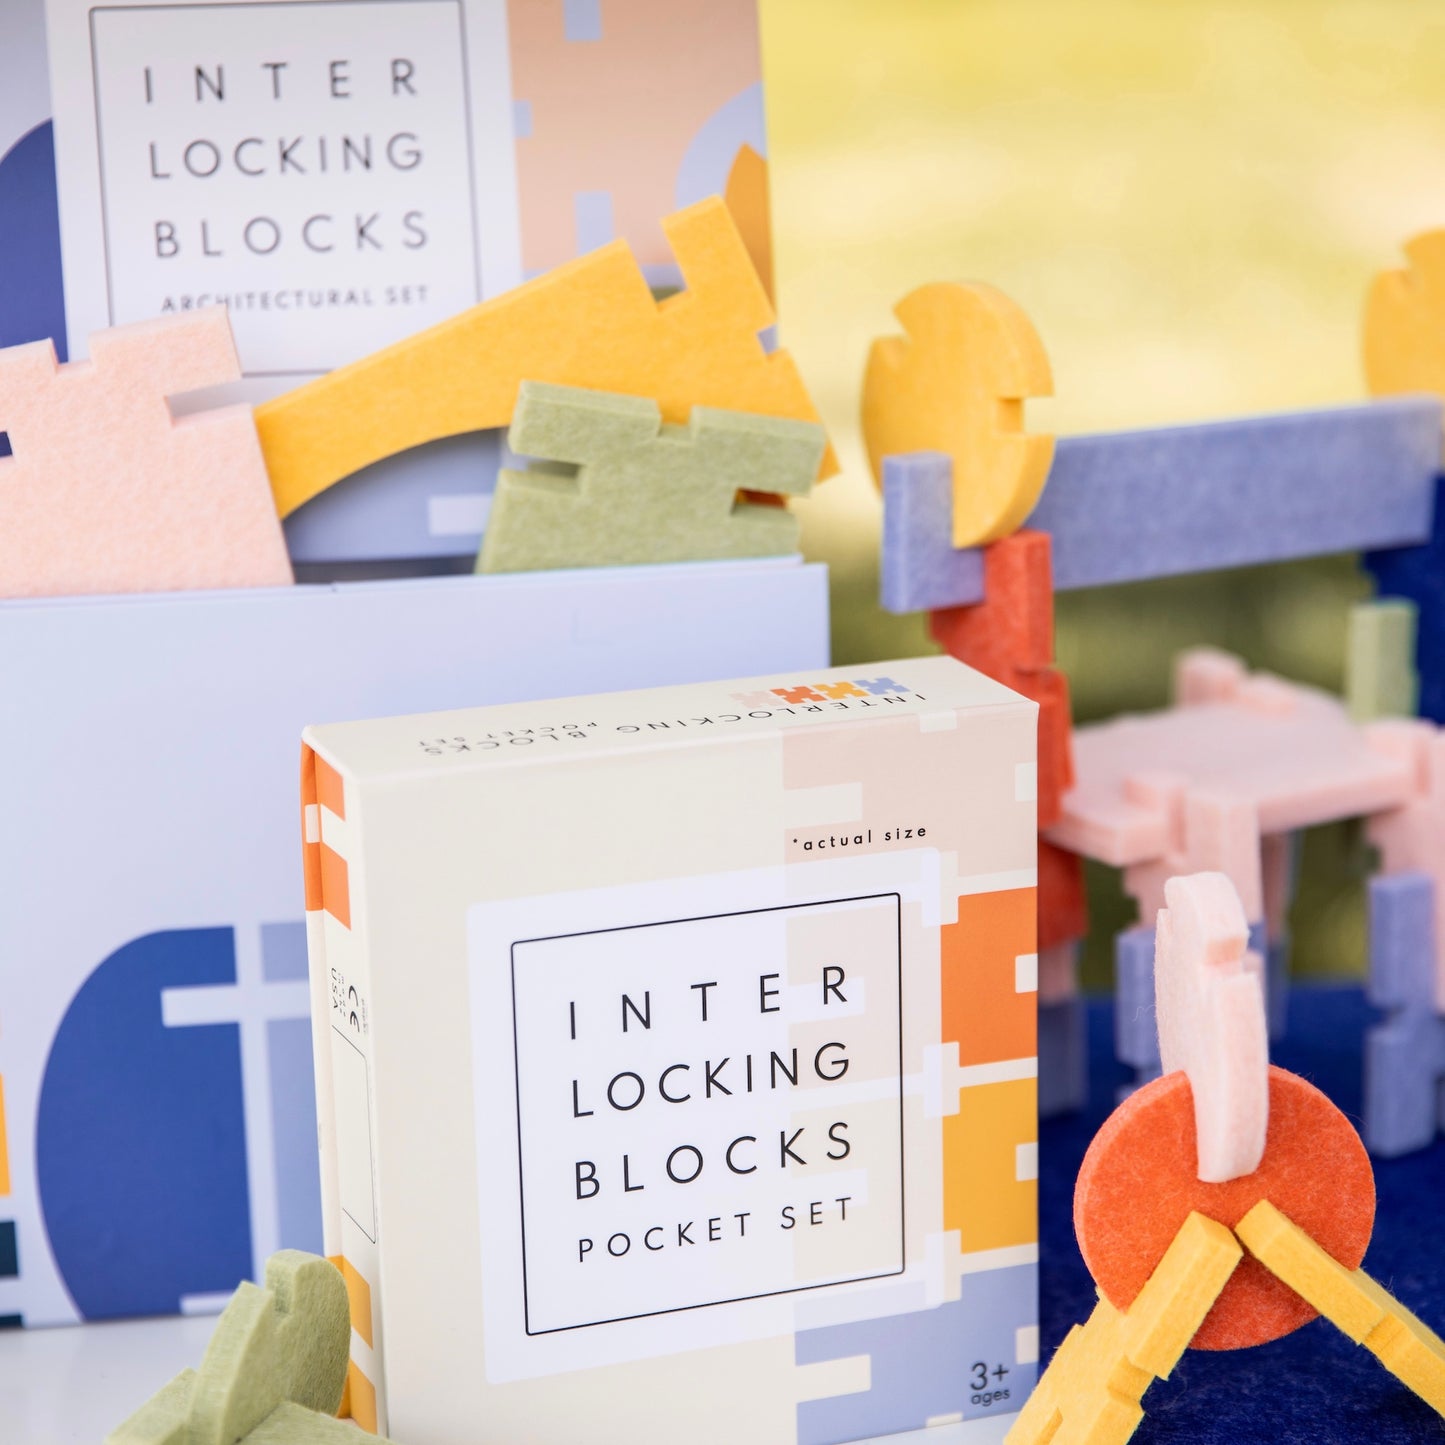 interlocking blocks - architectural set